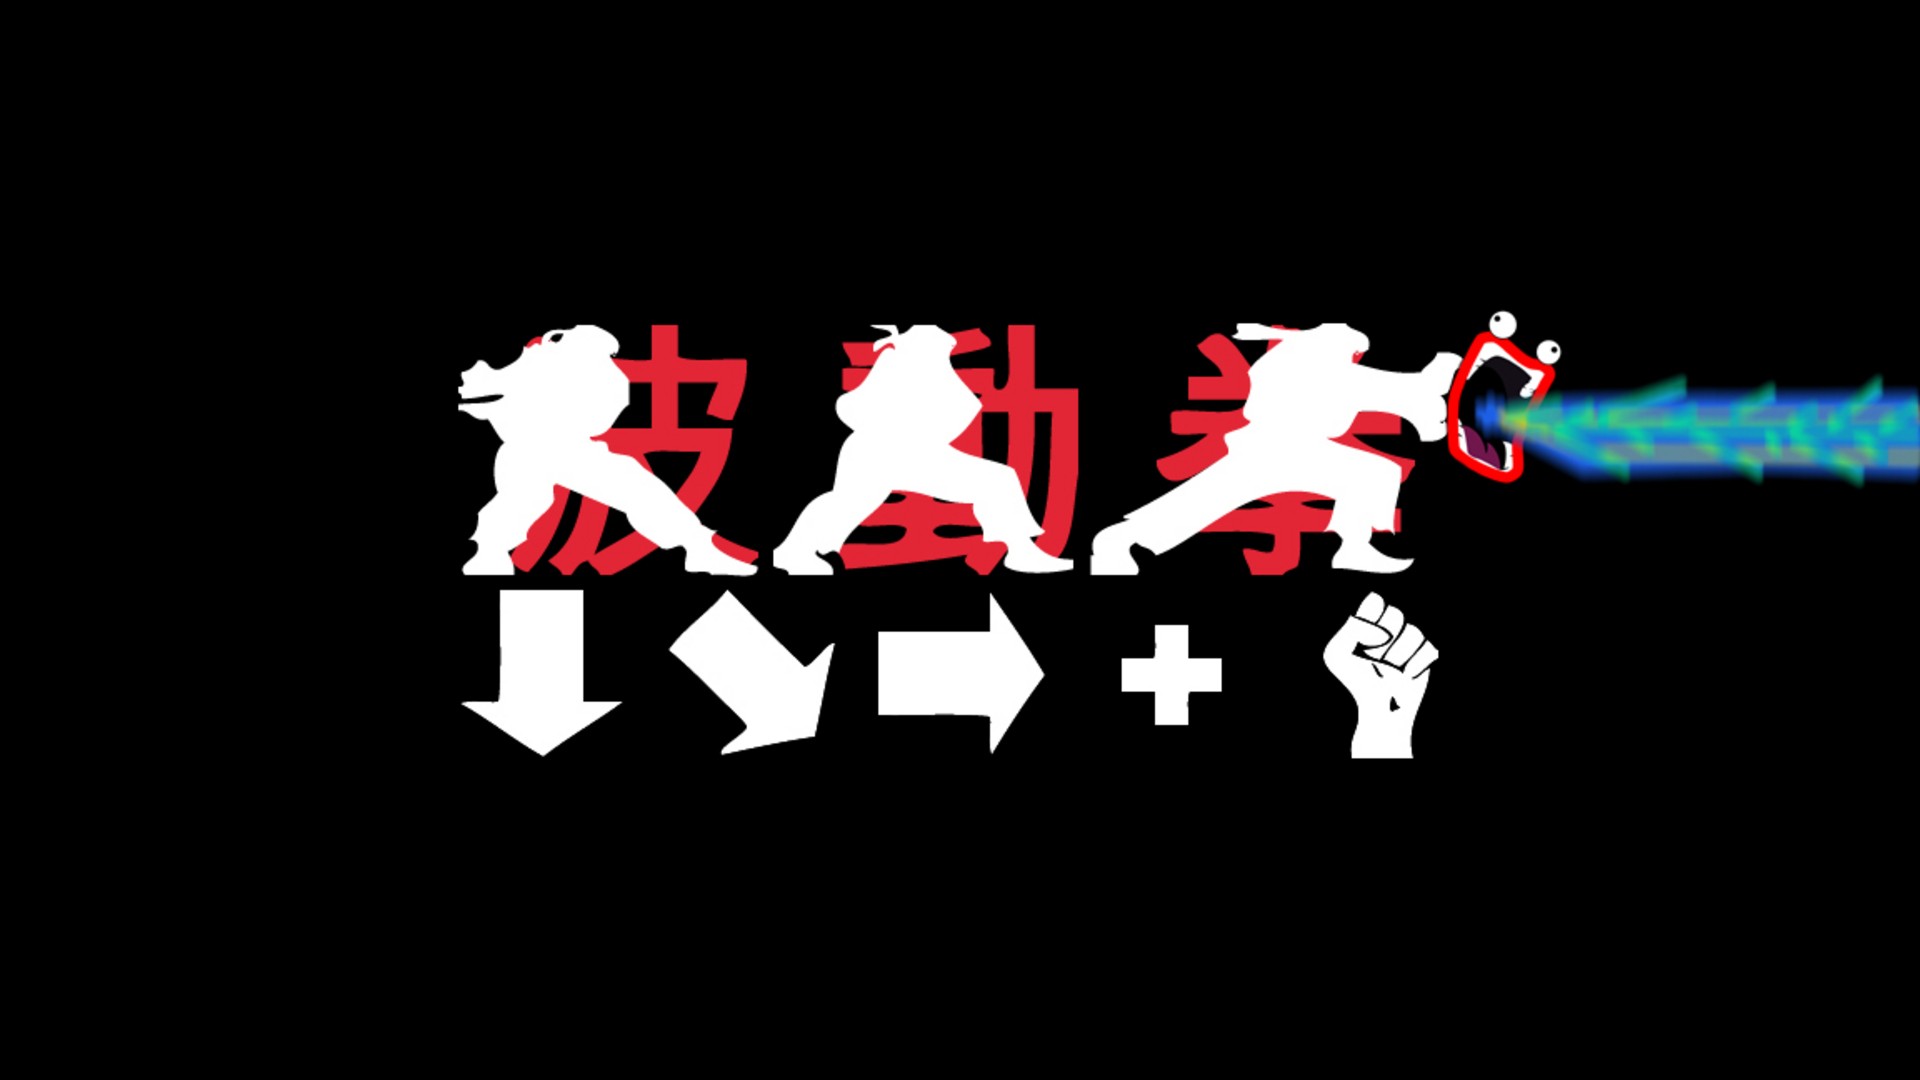 General 1920x1080 video games Hadouken memes Street Fighter simple background black background video game art